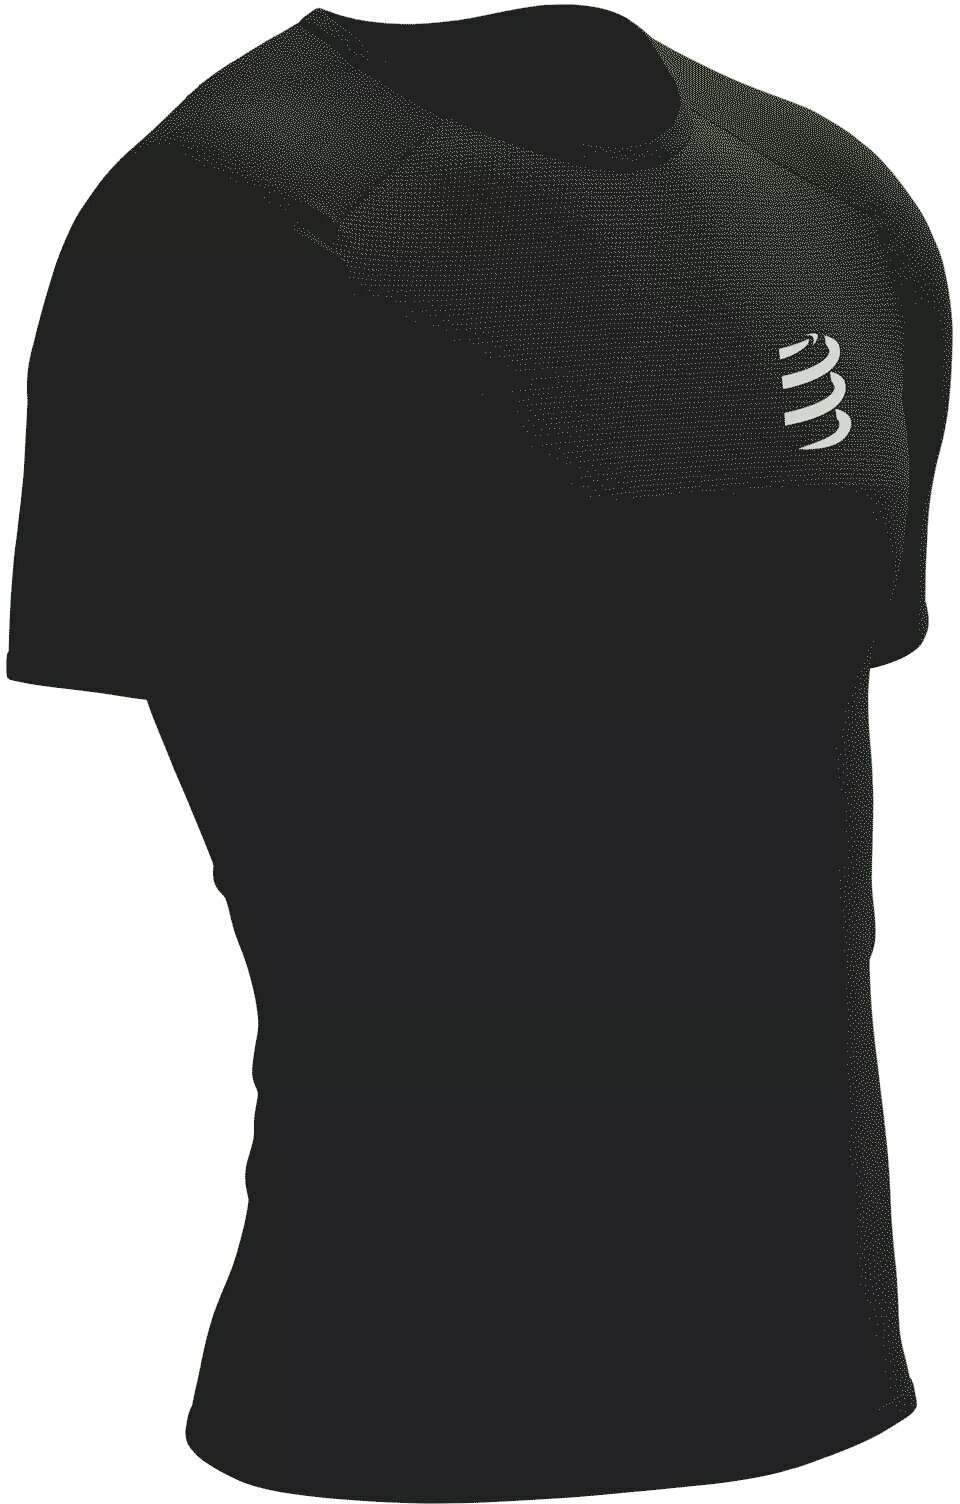 Running t-shirt with short sleeves
 Compressport Performance SS Tshirt M Black/White L Running t-shirt with short sleeves